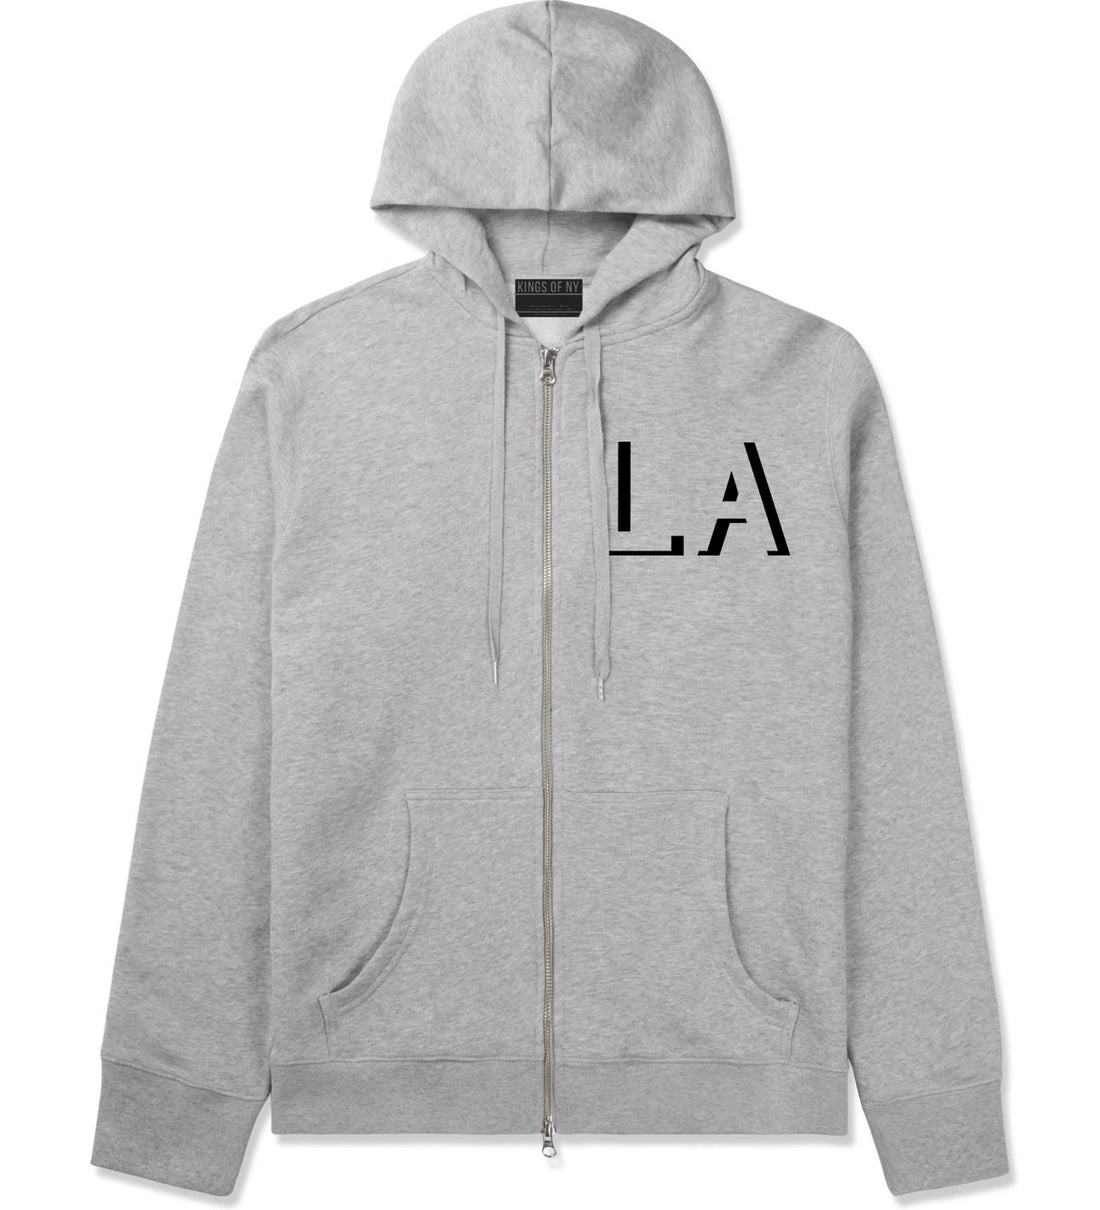 LA Shadow Logo Los Angeles in Grey by Kings Of NY